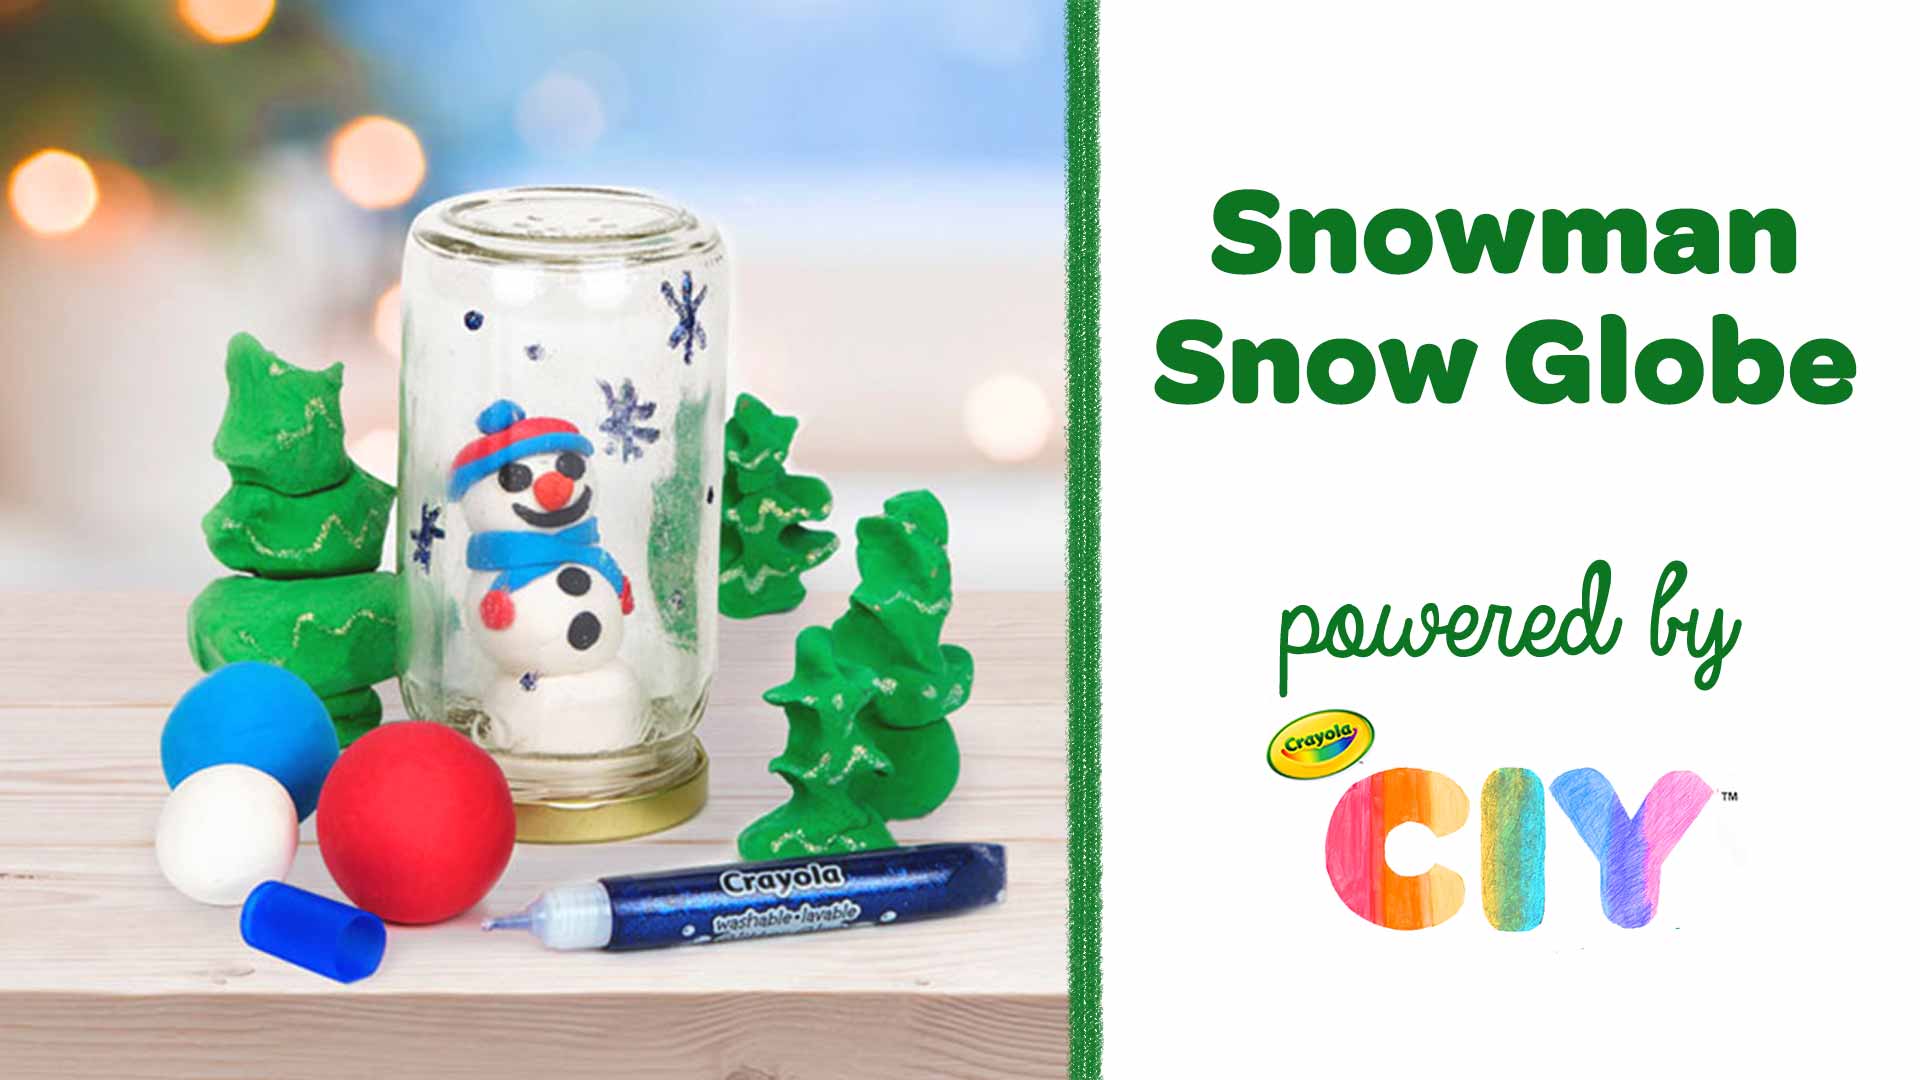 DIY Snow Globe Kids Craft Kits Set - Arts and Crafts Activities